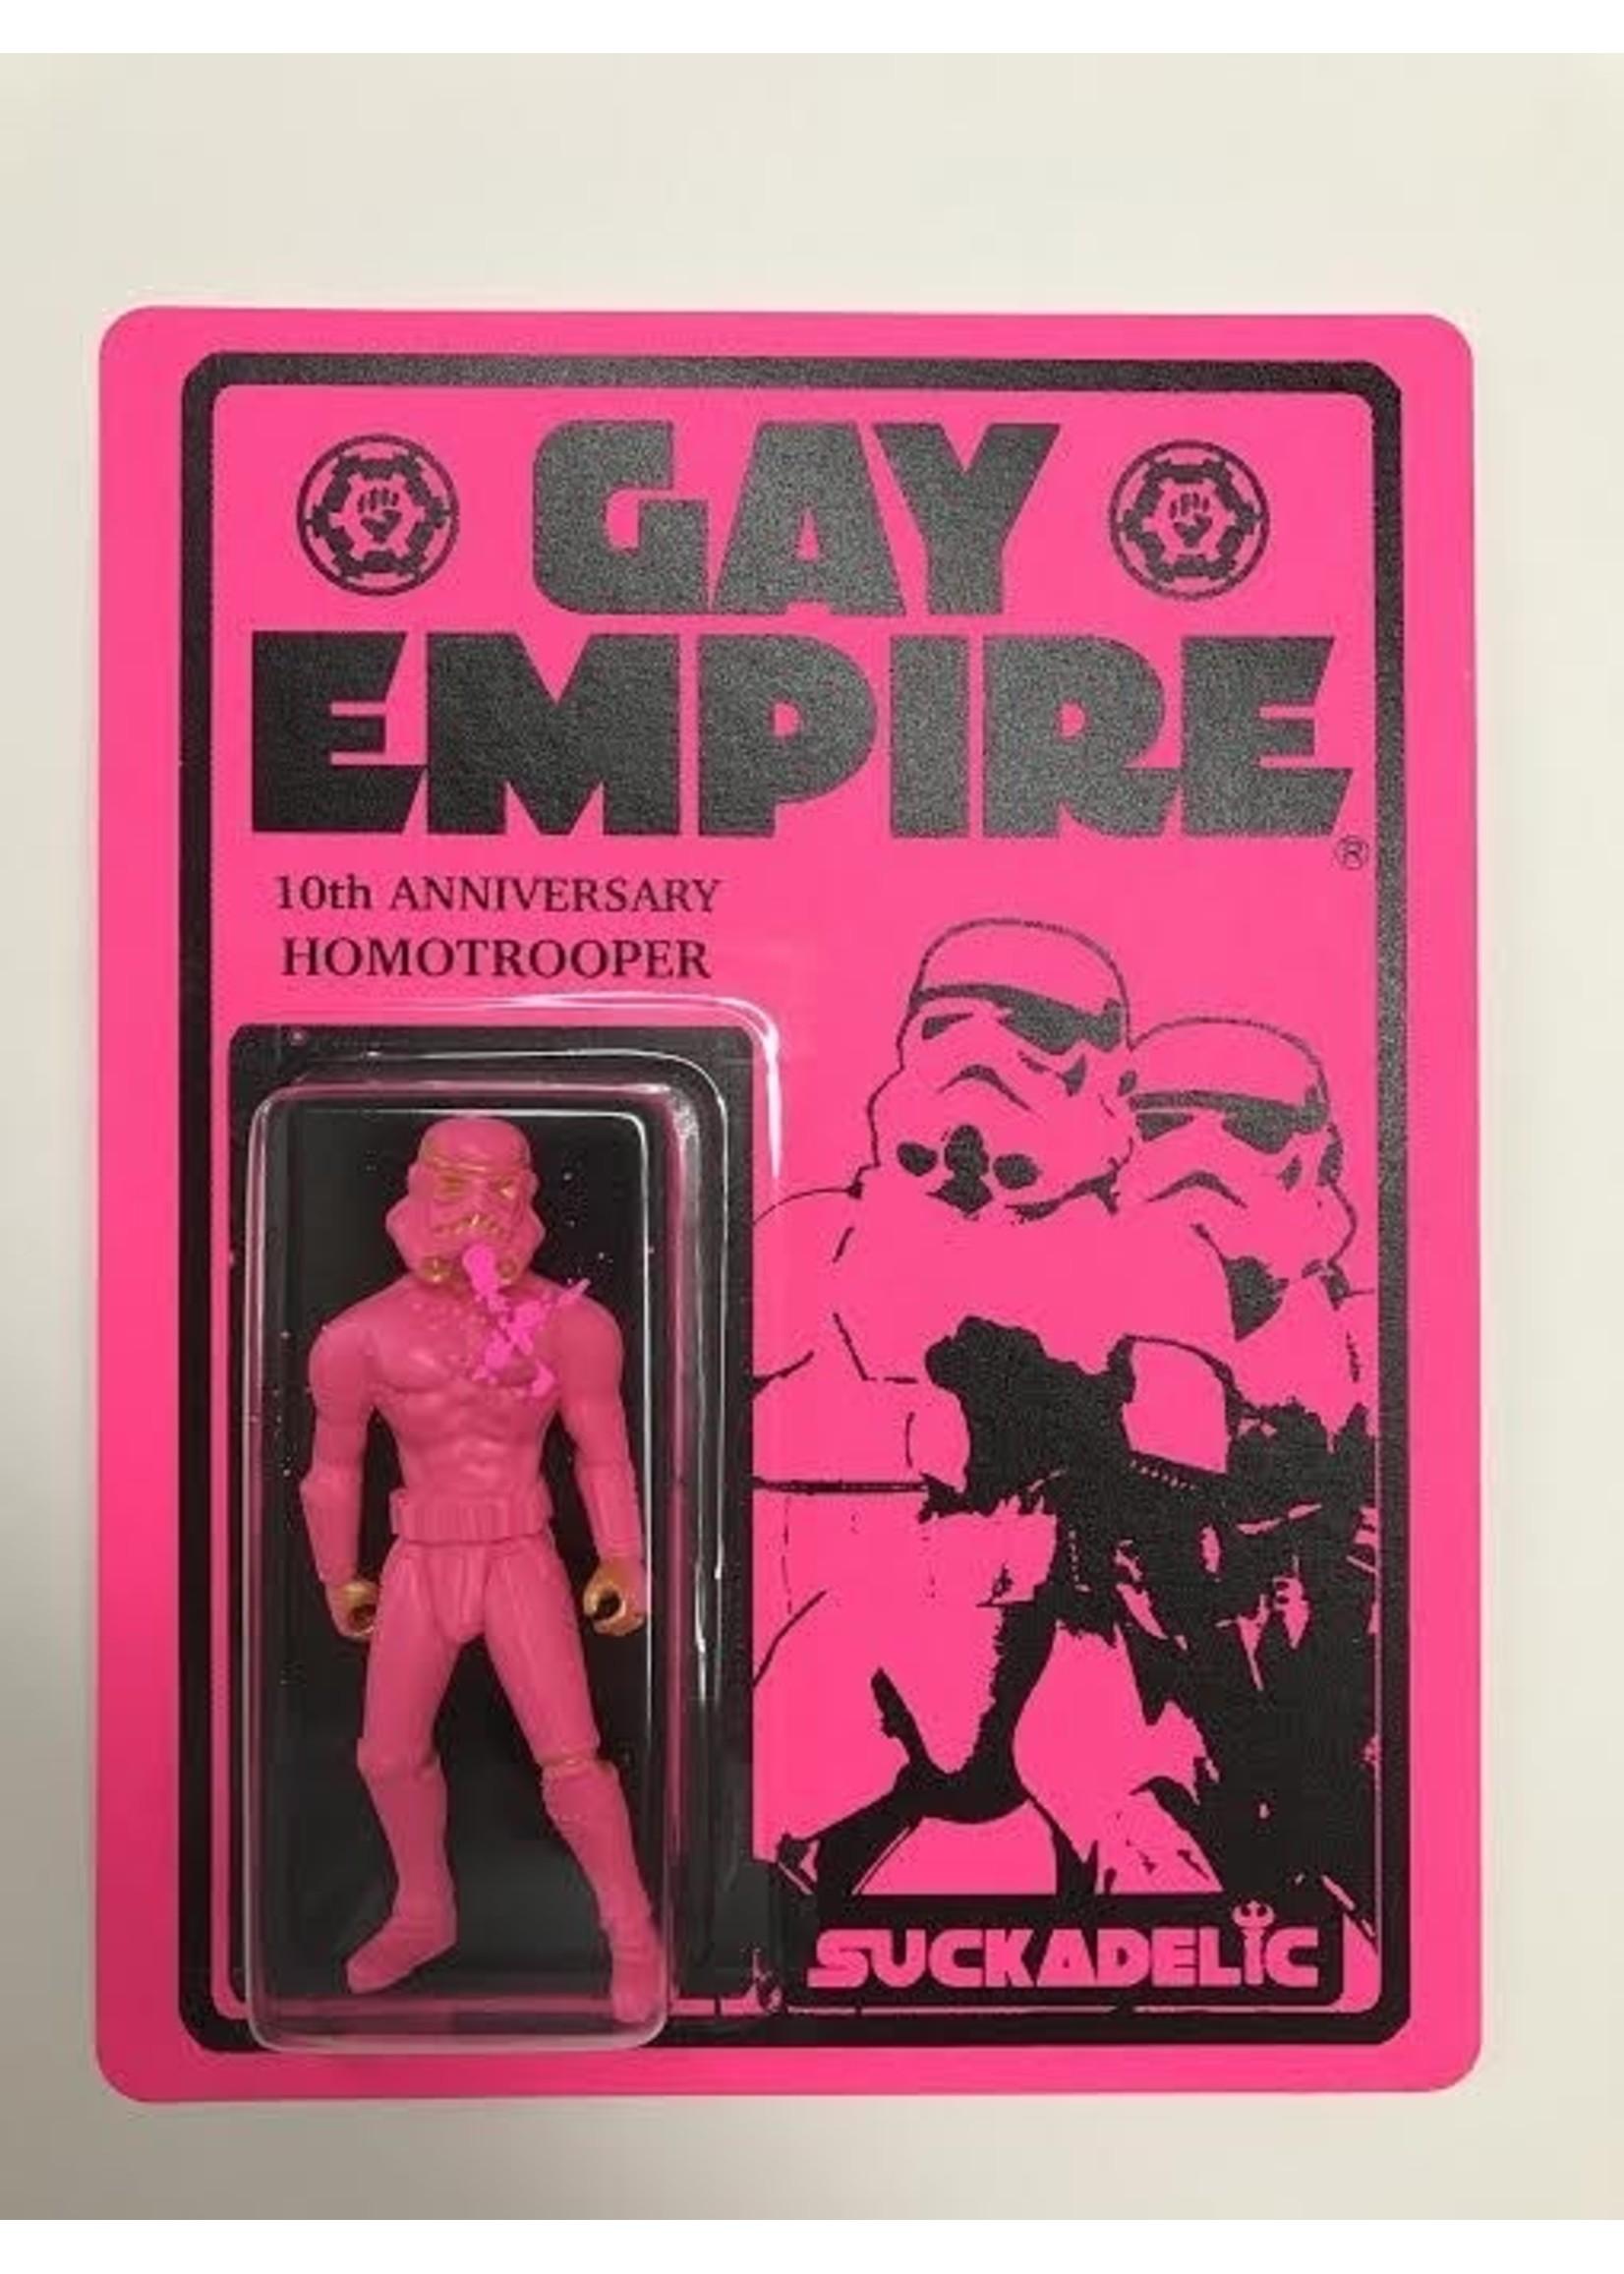 Star Wars Gay Empire 10th Anniversary Edition Homotrooper